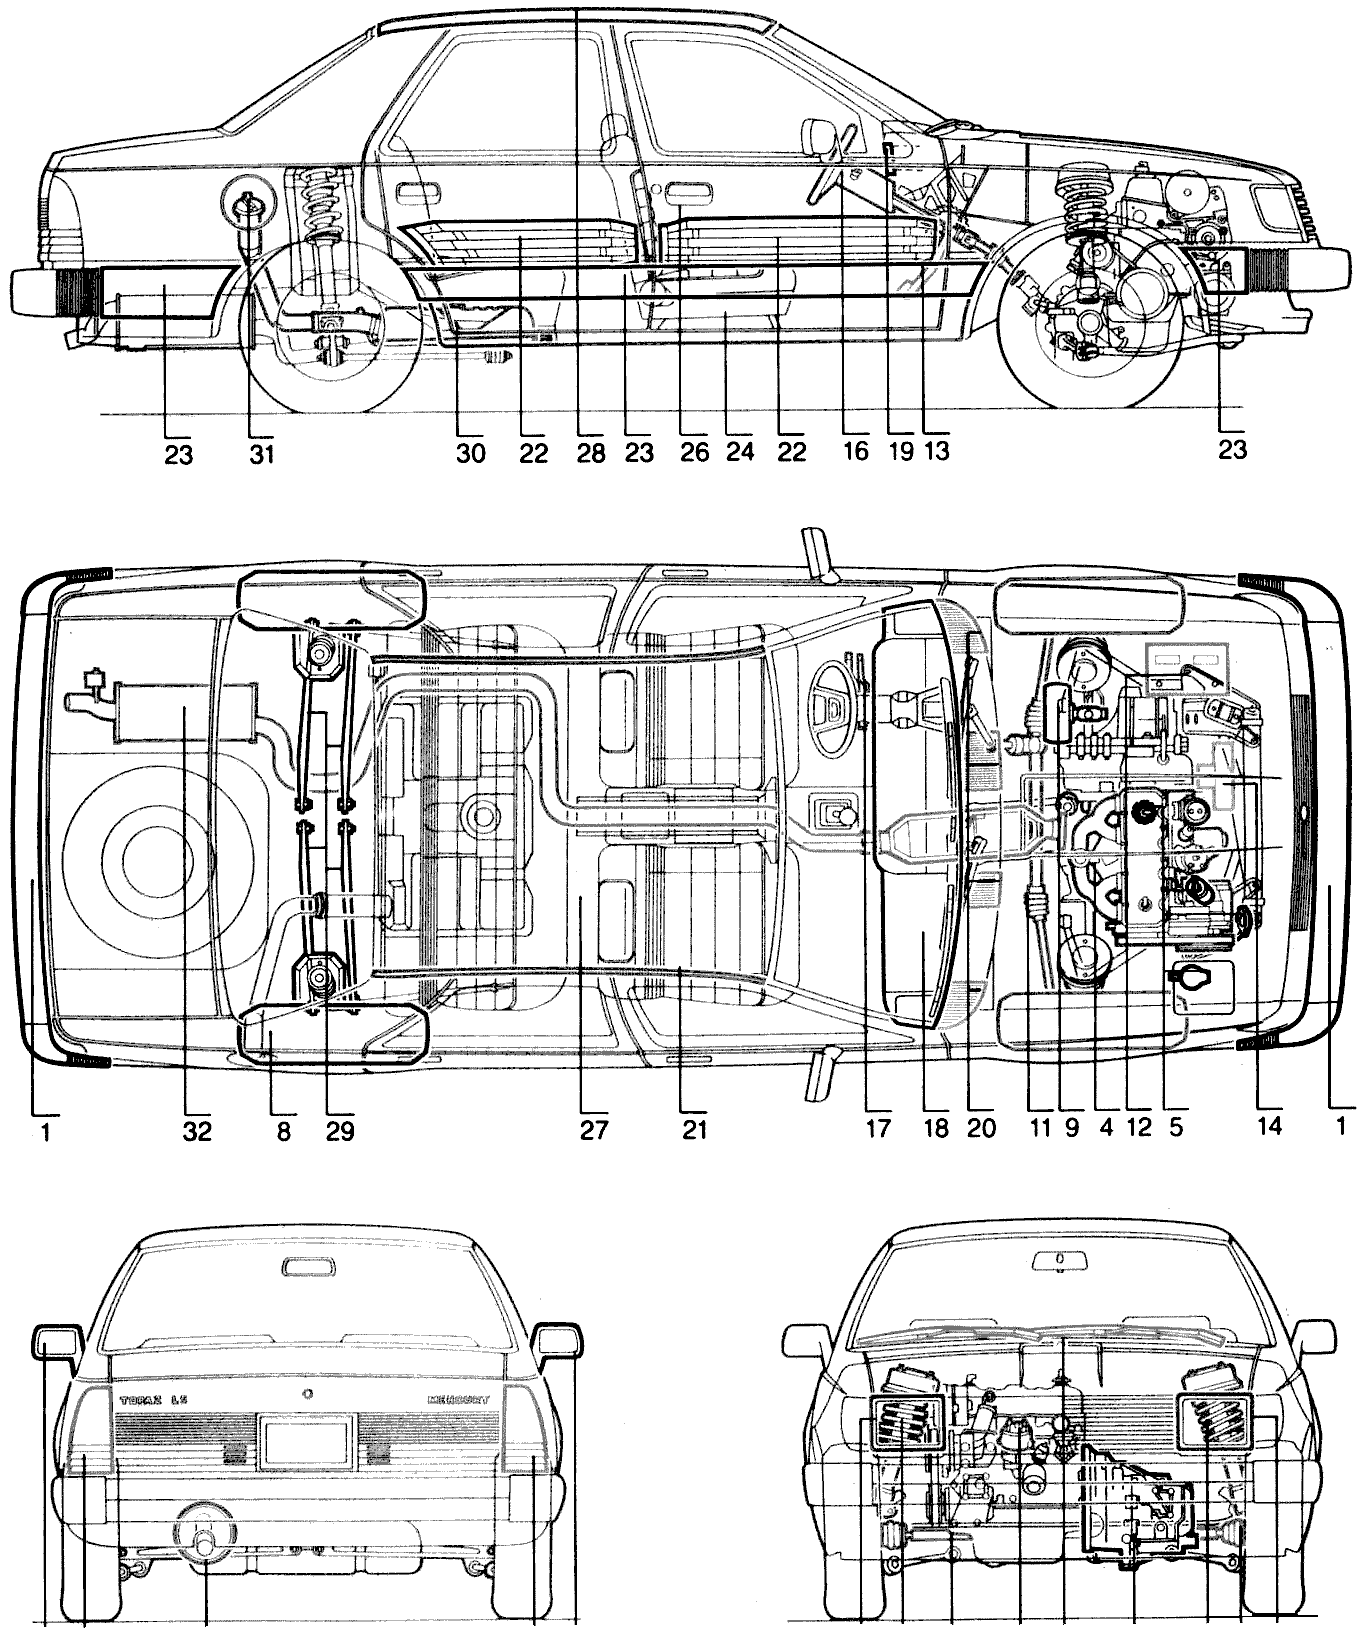 Ford Tempo blueprint